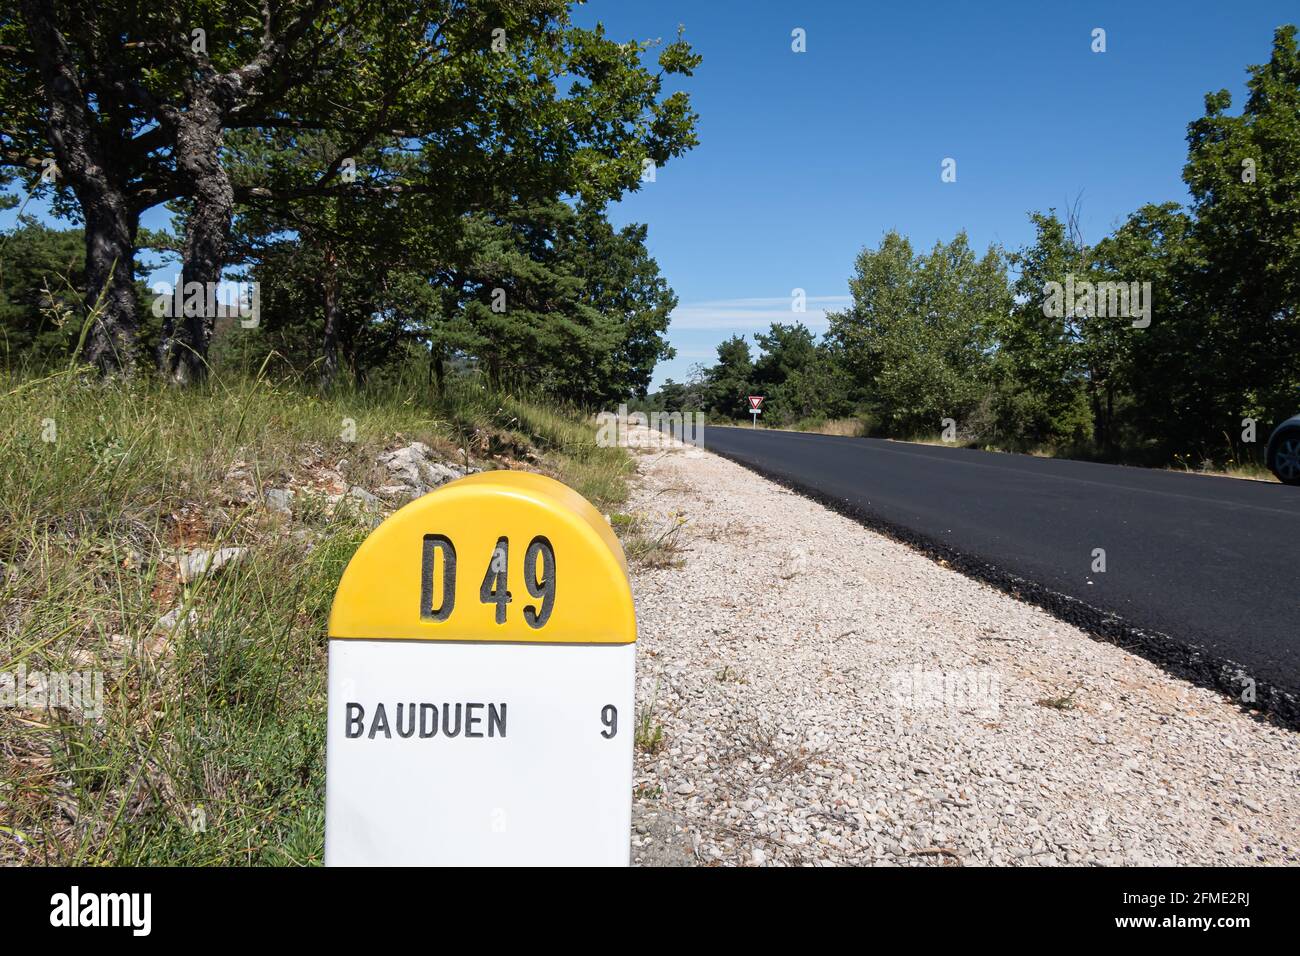 Bauduen, France - July 5, 2020: Roadside marking of department road D49 Stock Photo